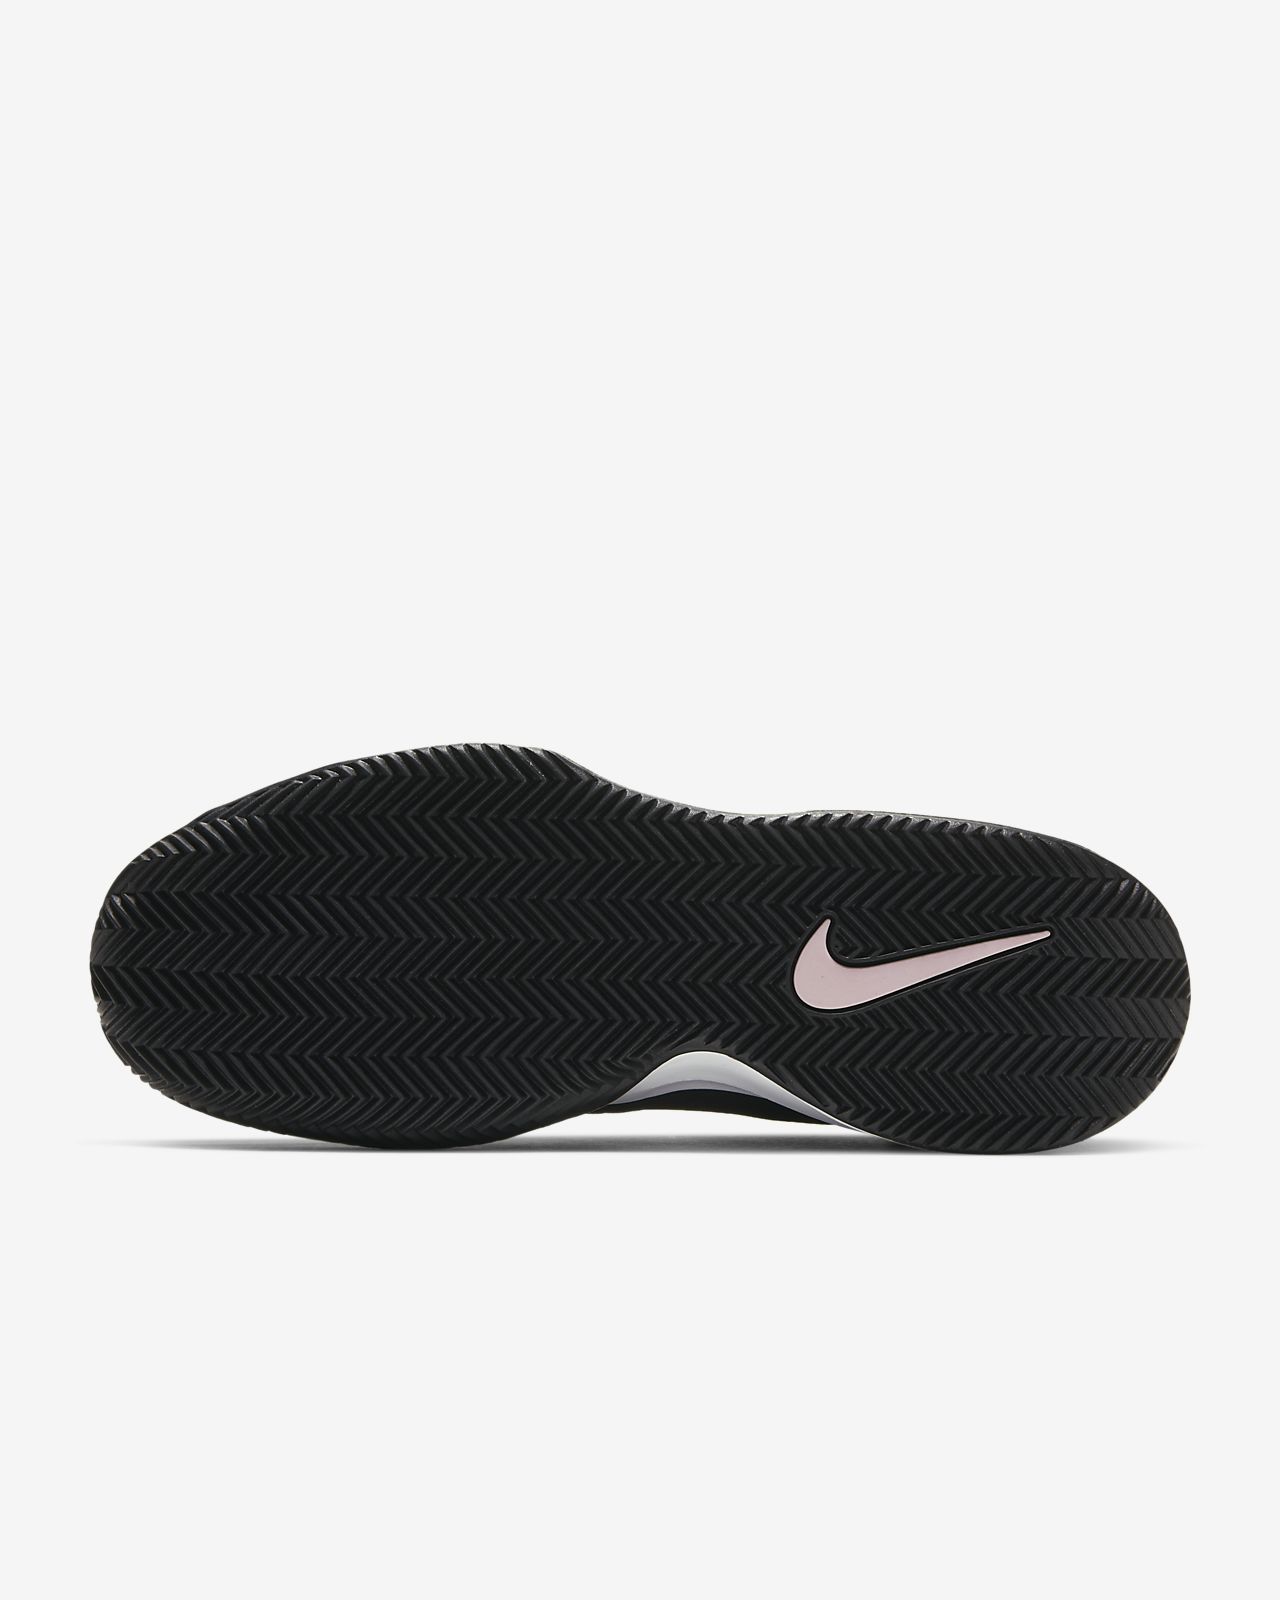 Clay Tennis Shoe. Nike BG